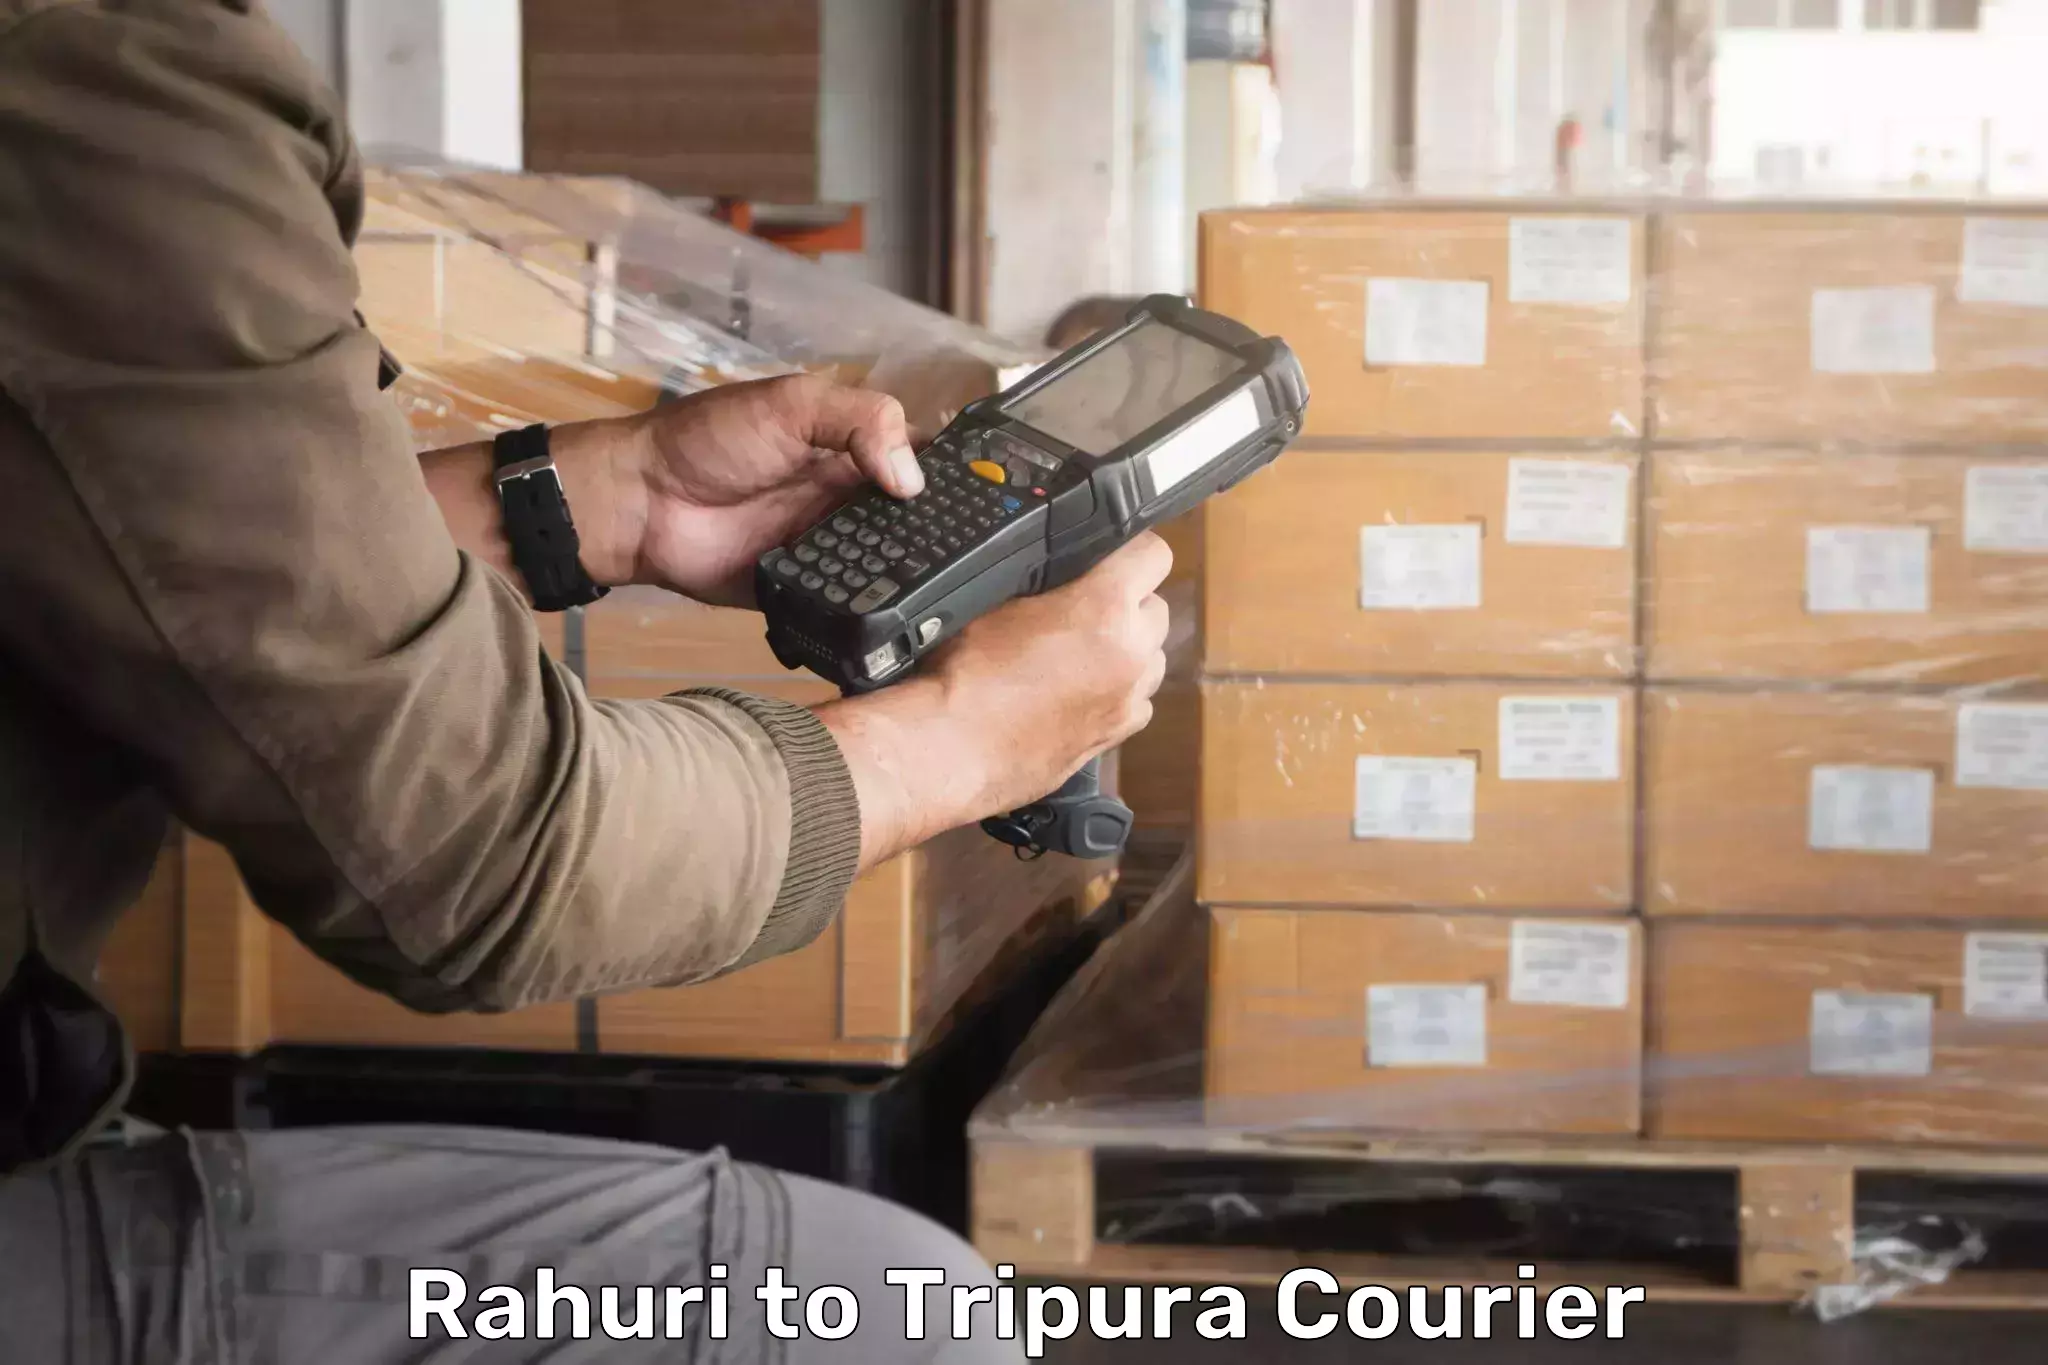 Pharmaceutical courier Rahuri to Udaipur Tripura